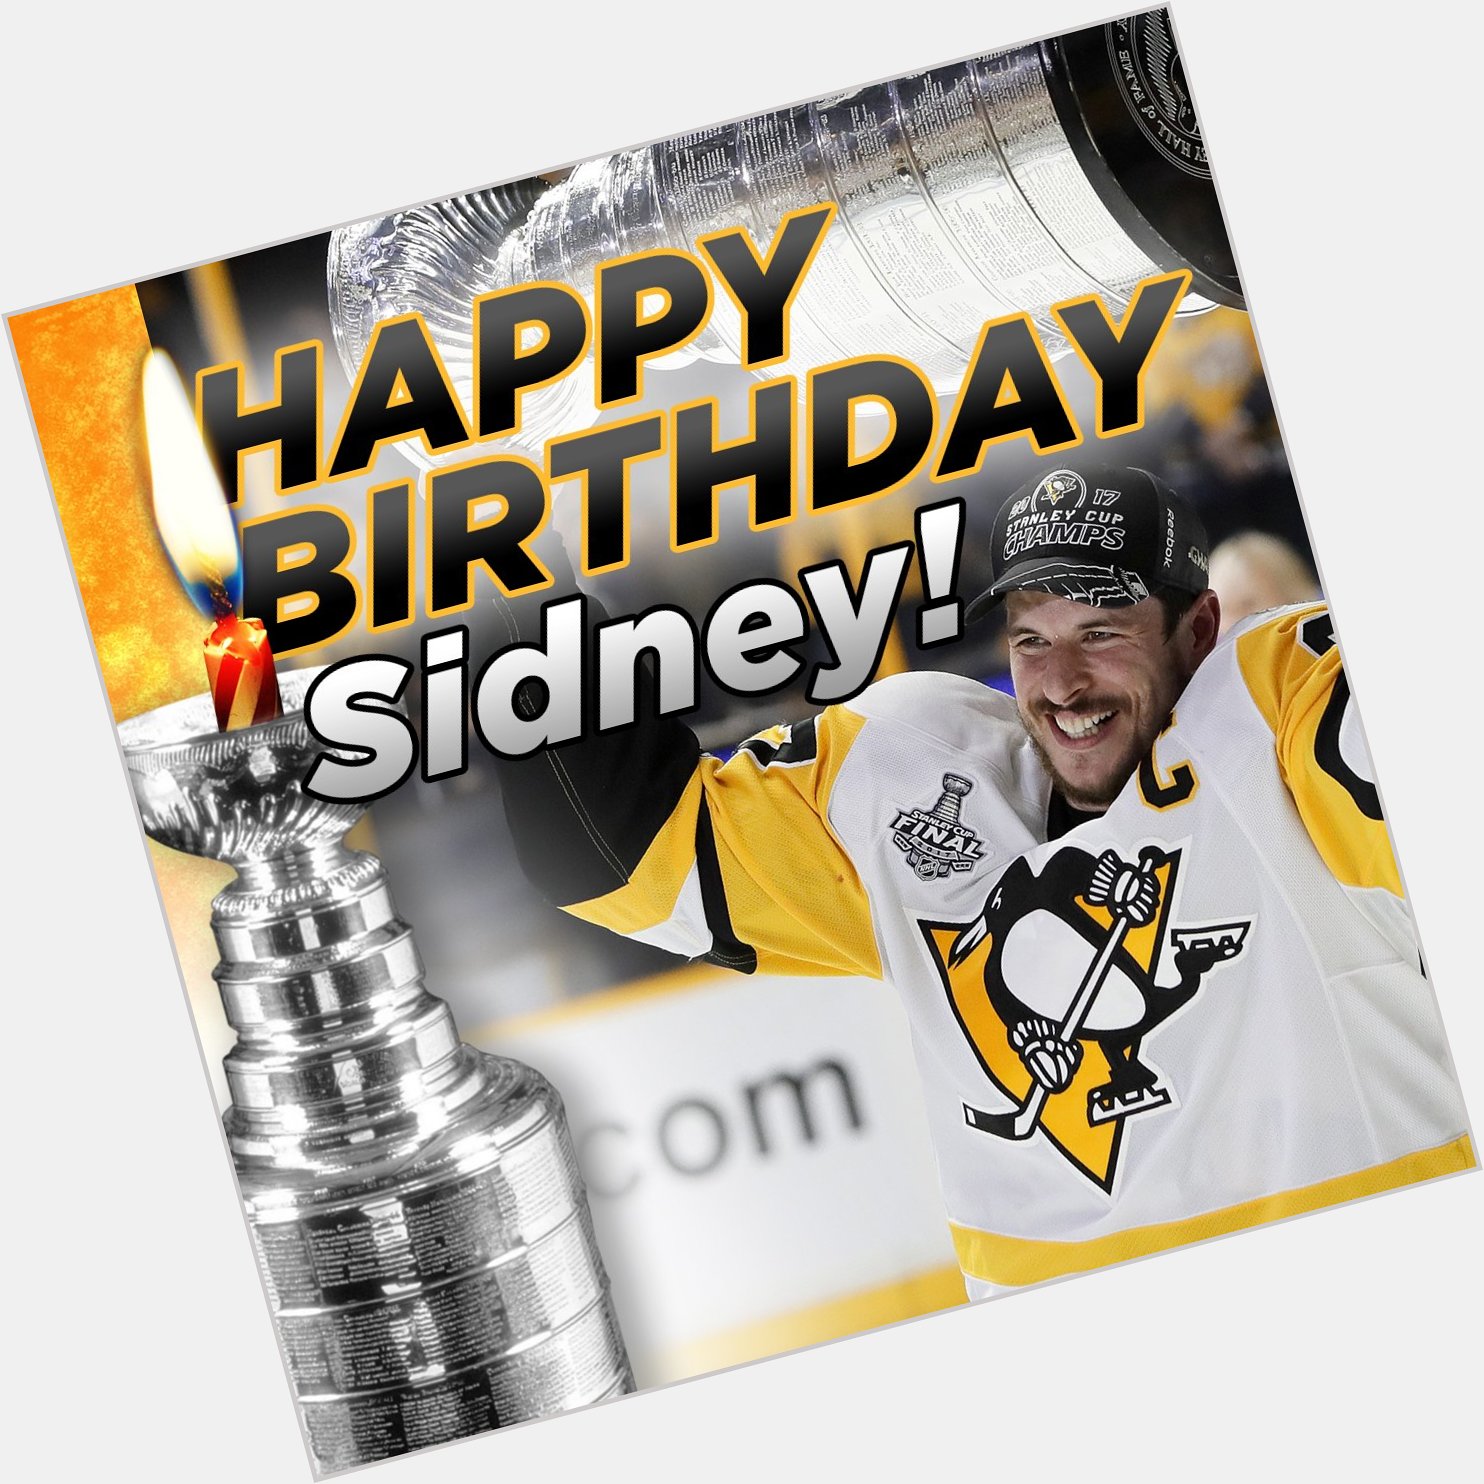 8-7-87
Happy Birthday to captain Sidney Crosby. 